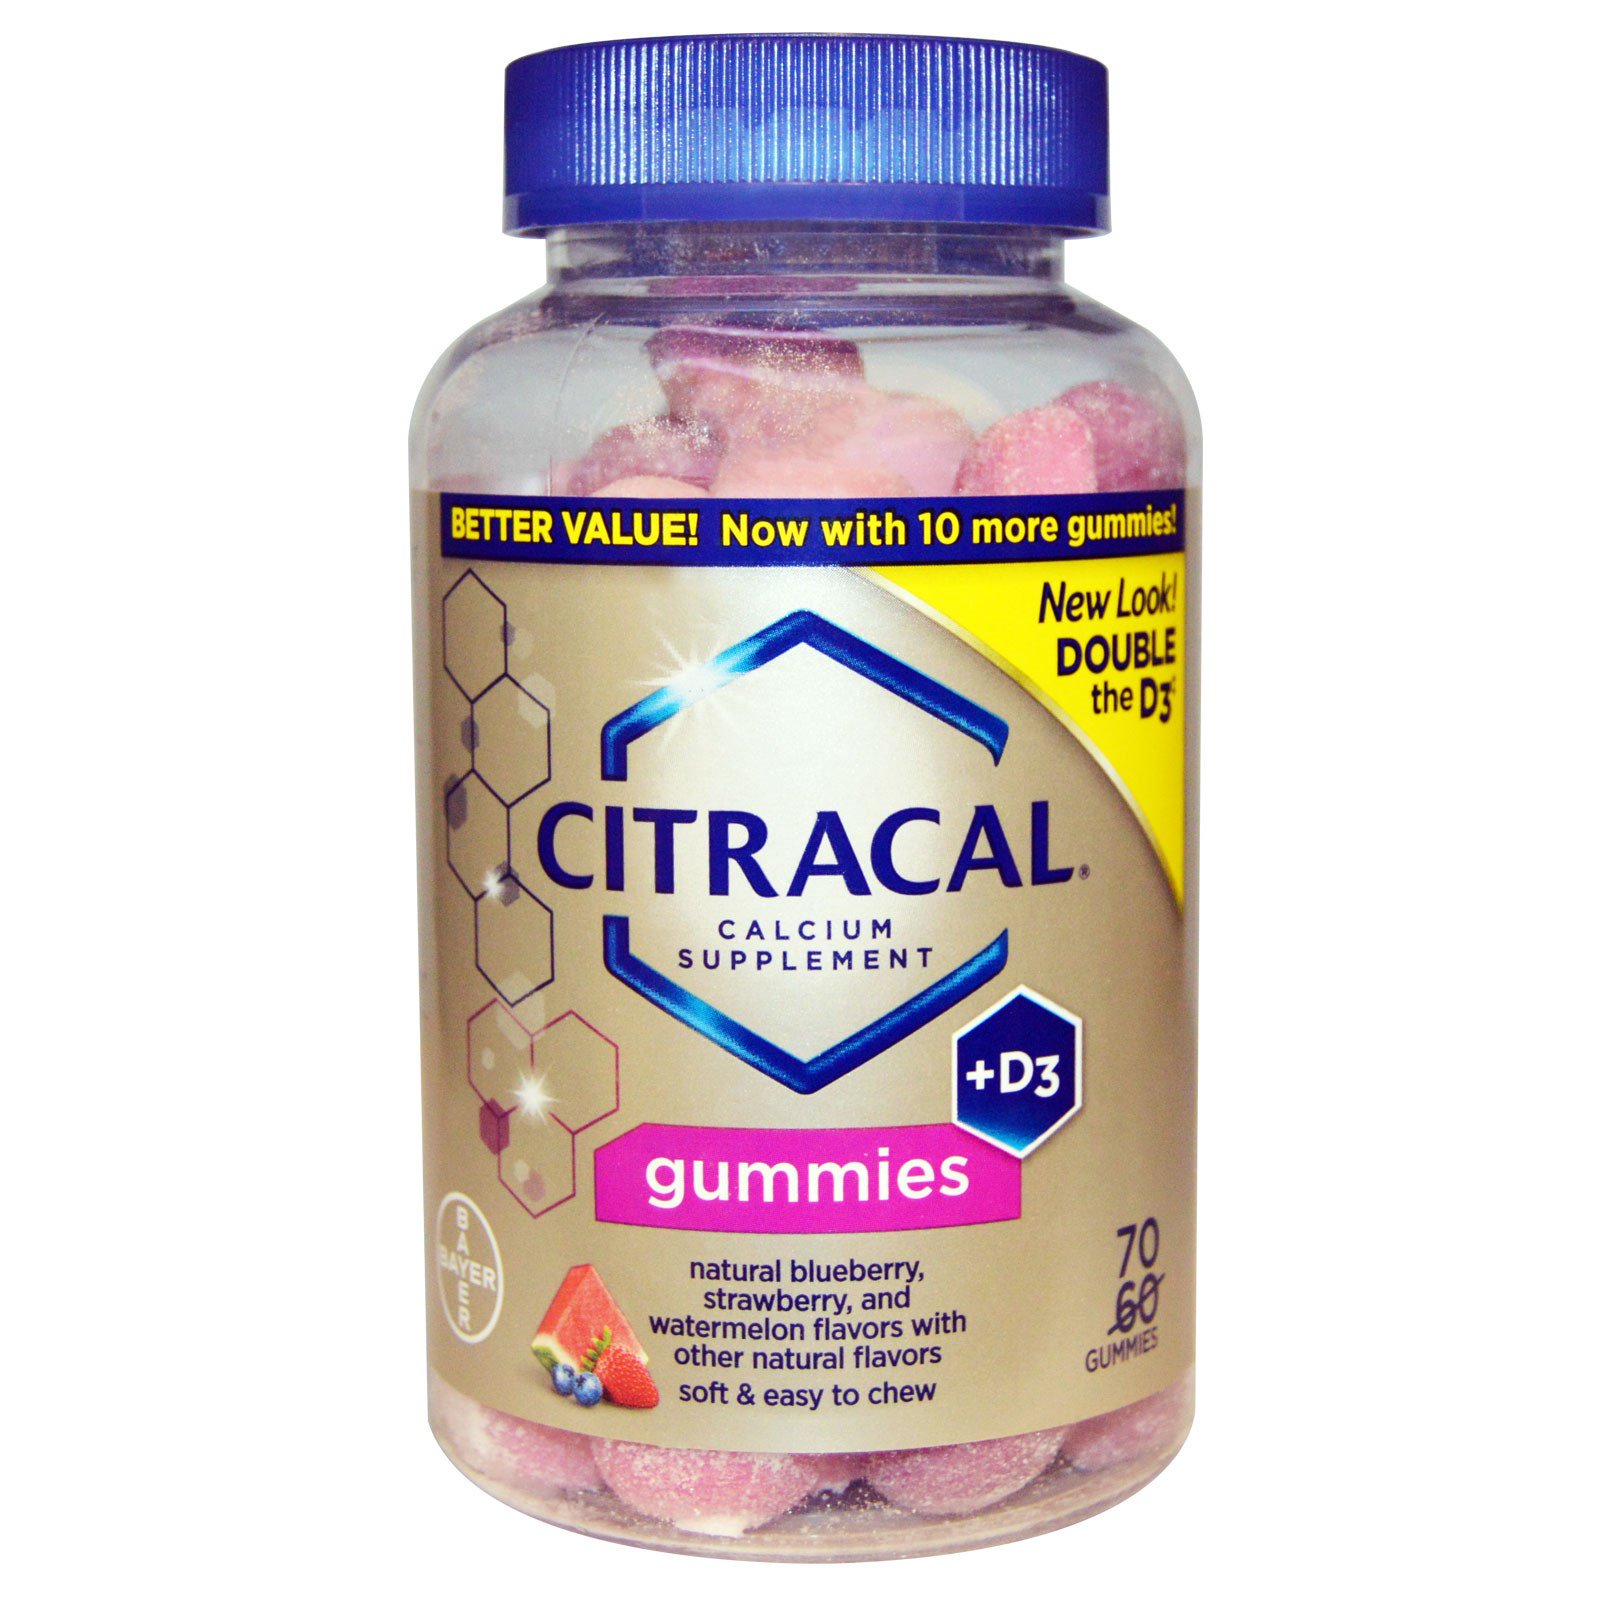 Value now. Citracal Calcium Supplement. Витамины Citracal. Calcium d3 Gummies. CA d3 витамины.